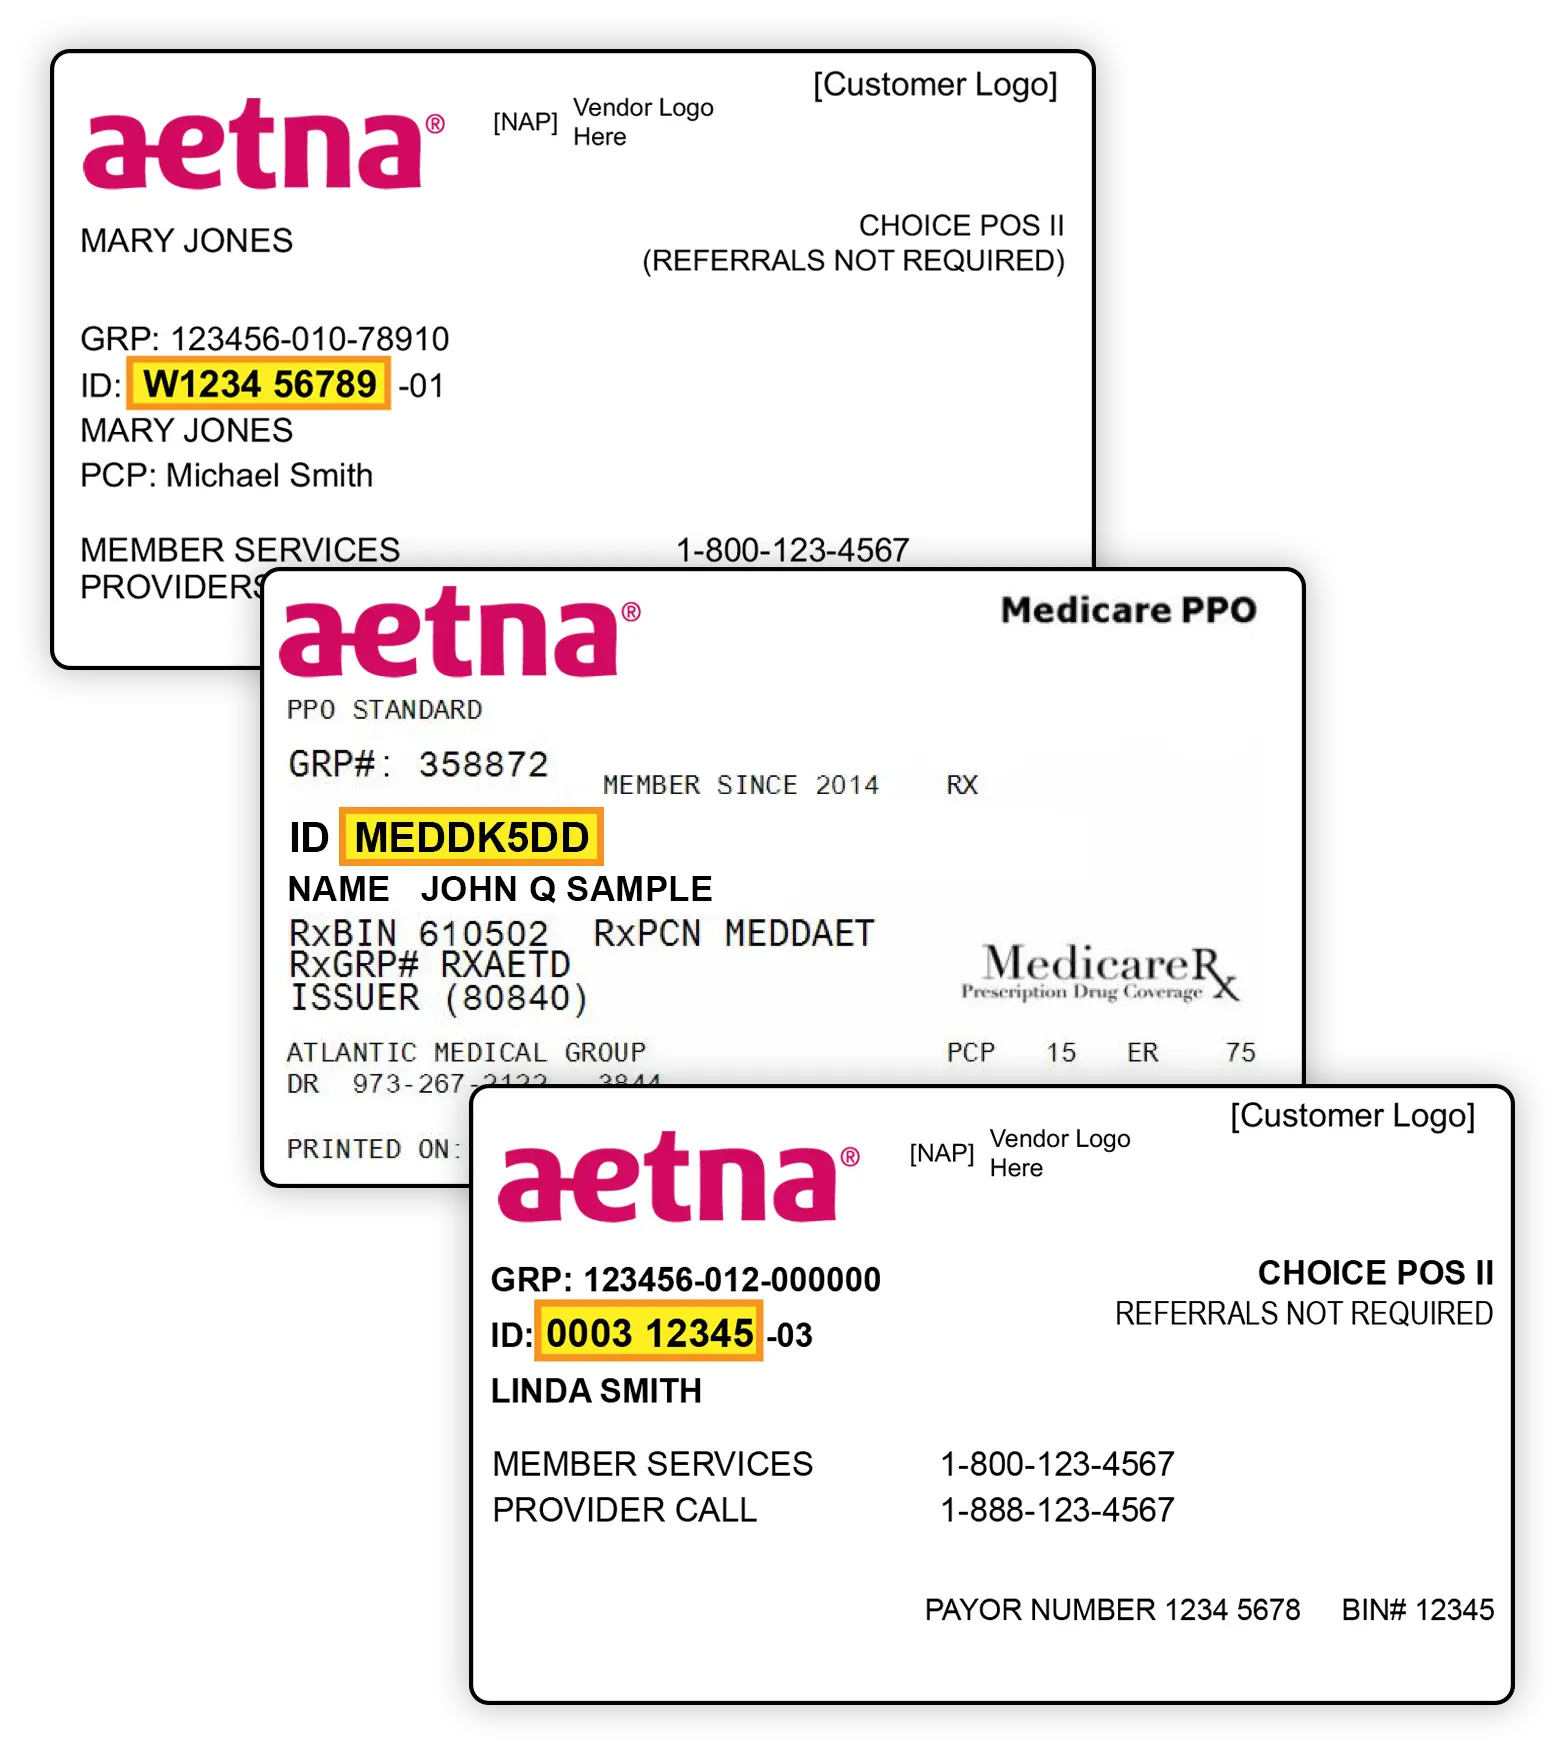 Is Aetna A Medicare Advantage Plan